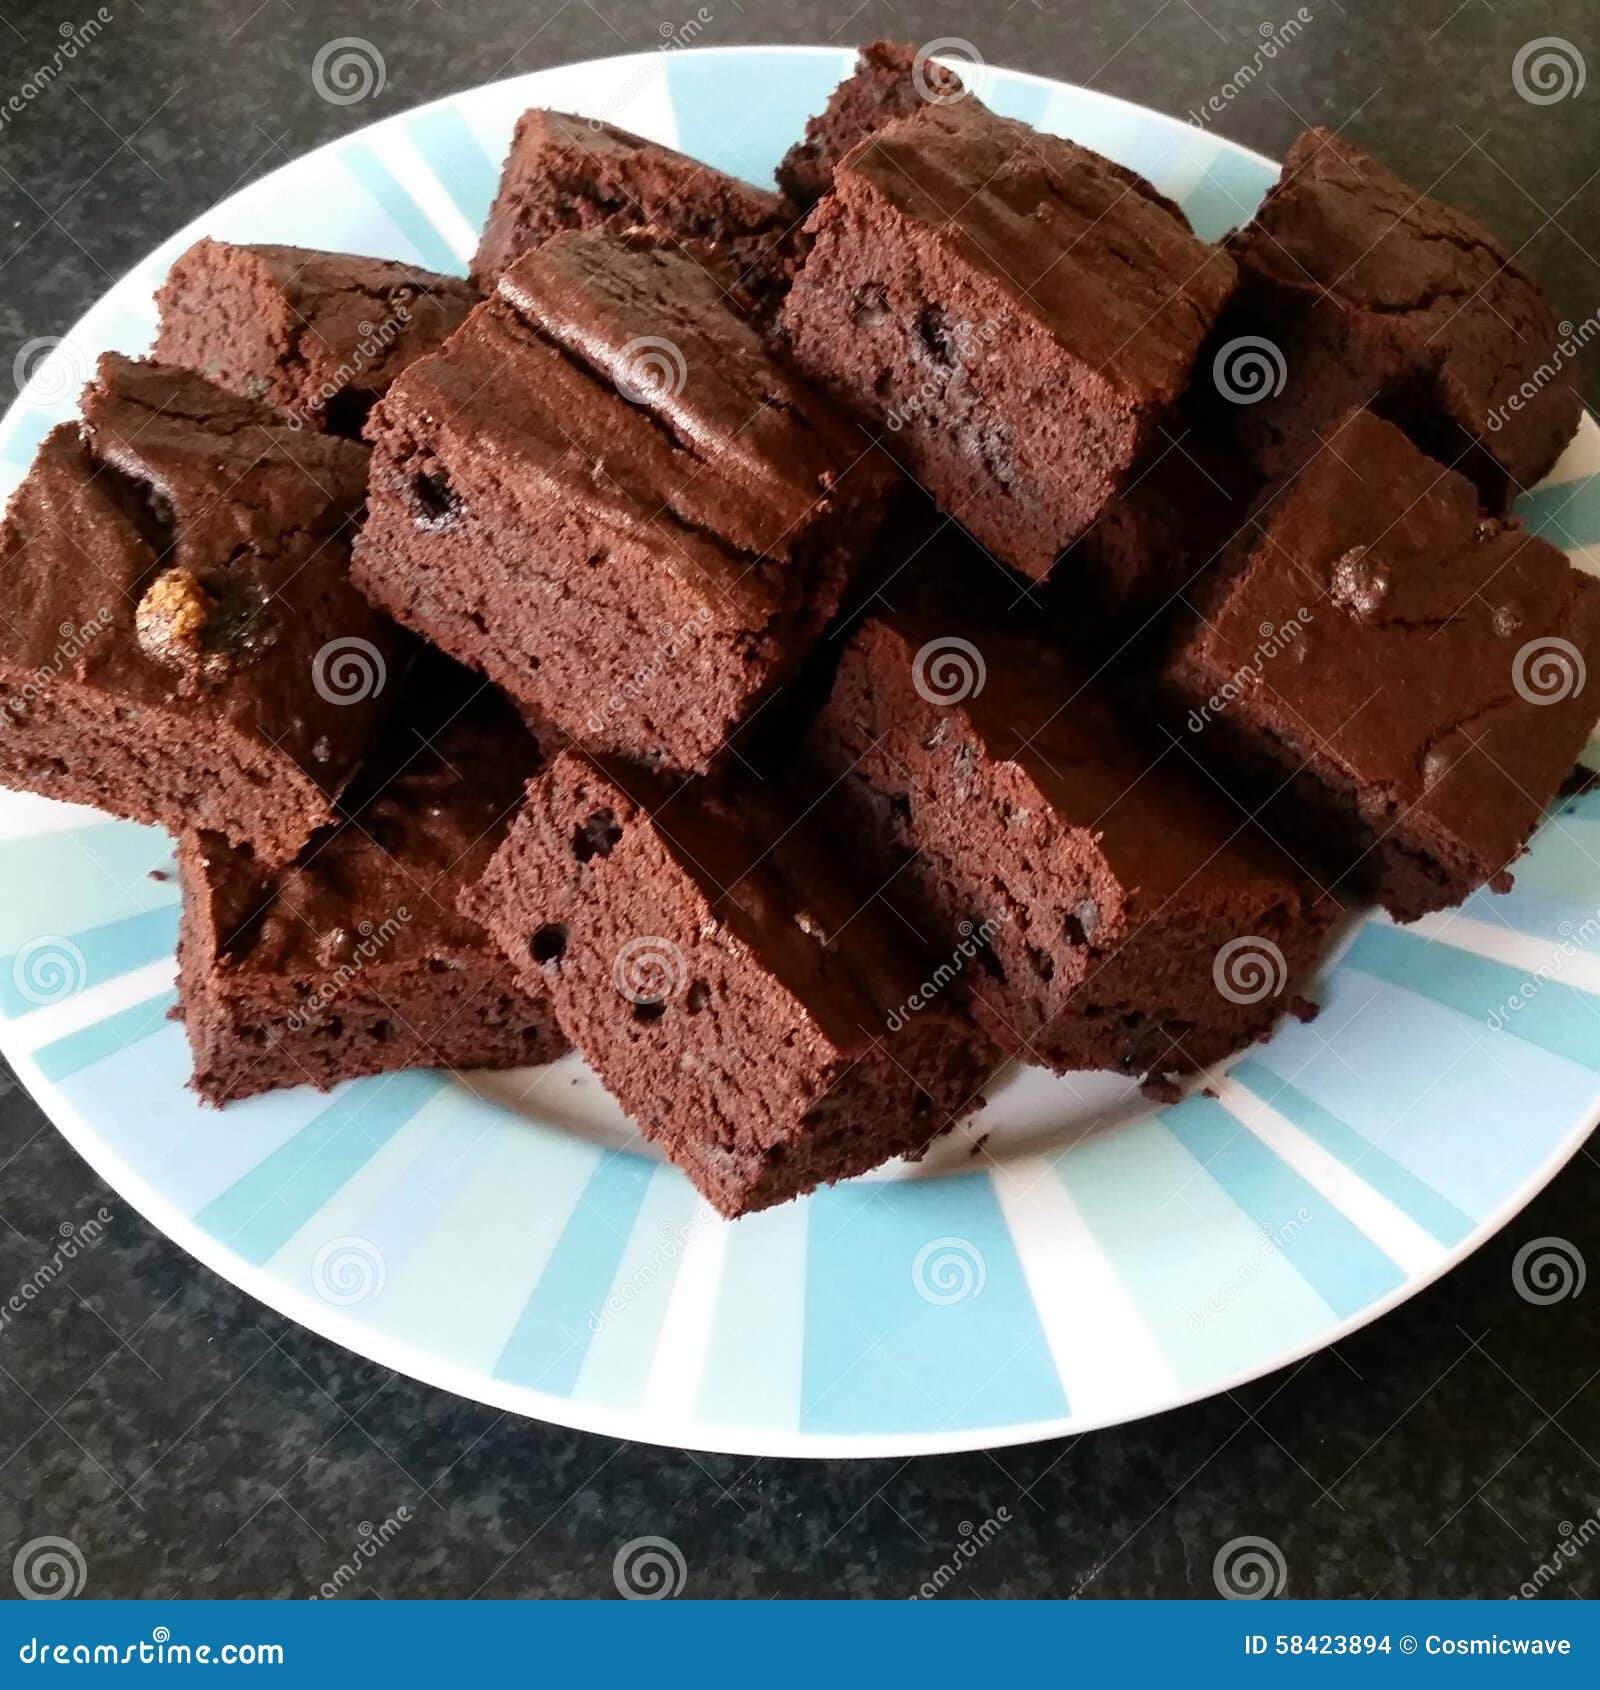 Chocolate Brownies Stock Photo - Image: 58423894